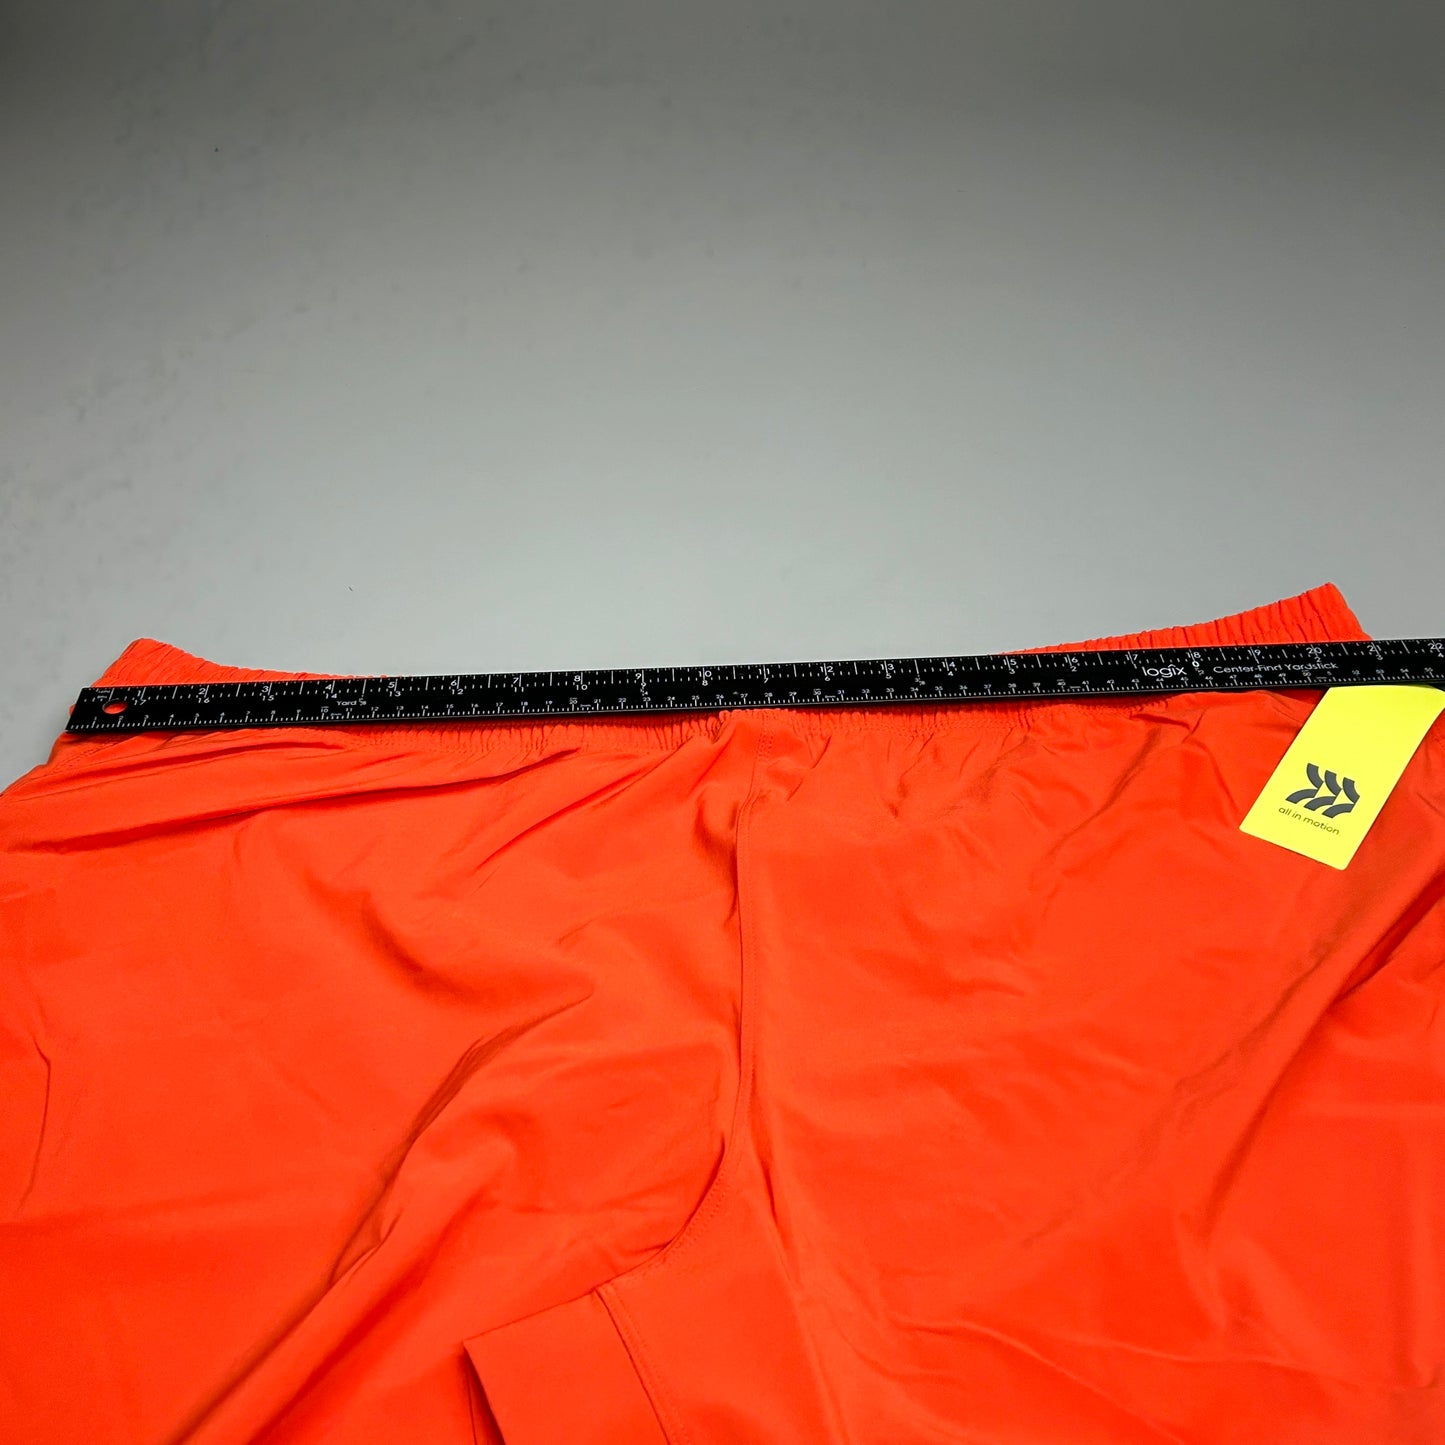 ALL IN MOTION Men's Lined Run Shorts 5" Dark Orange Sz XXL (New)